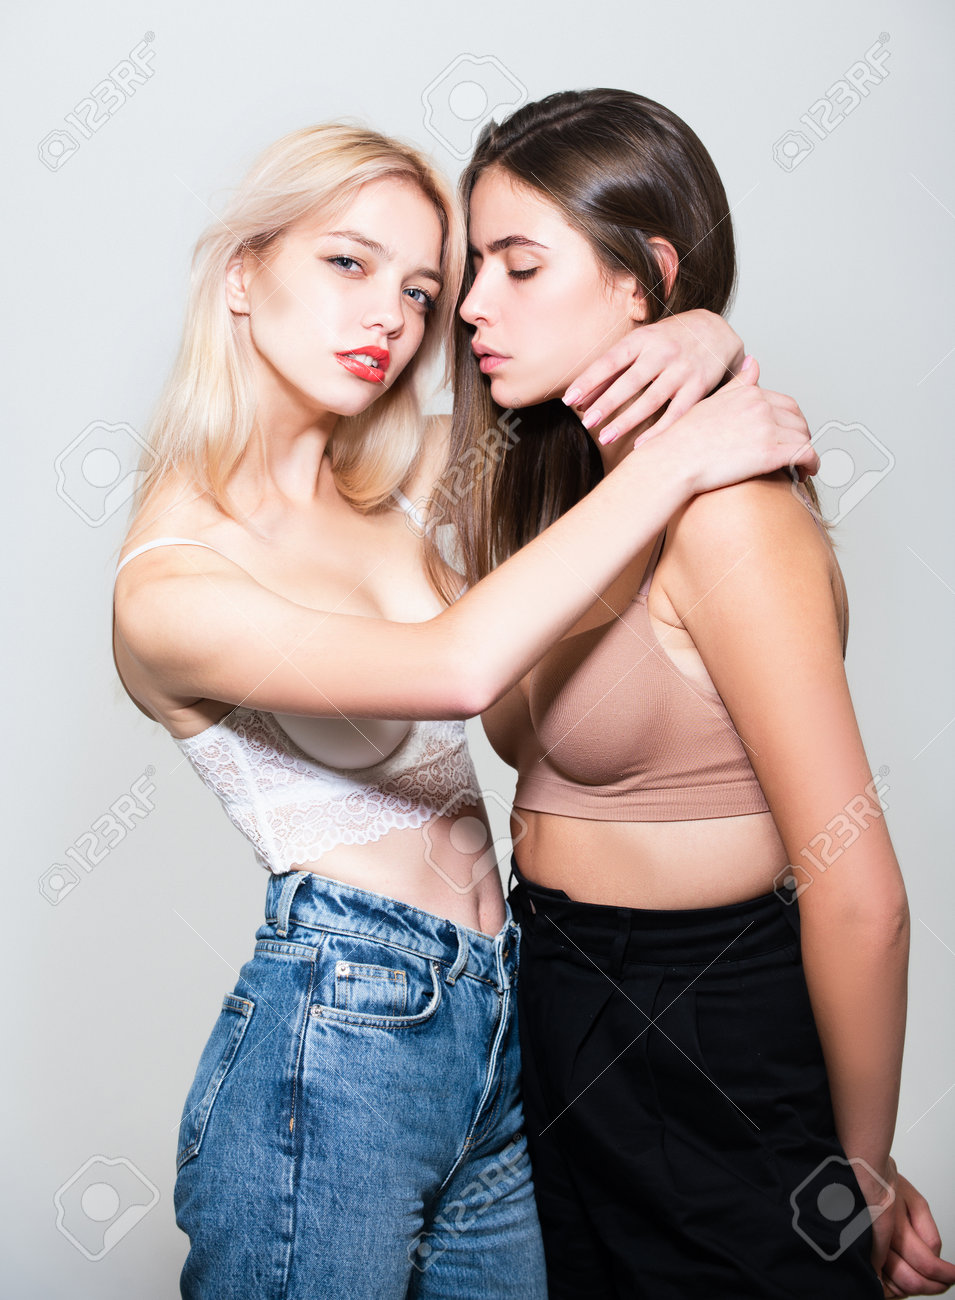 alusio vakaoqotabua recommends lesbian seducing younger women pic